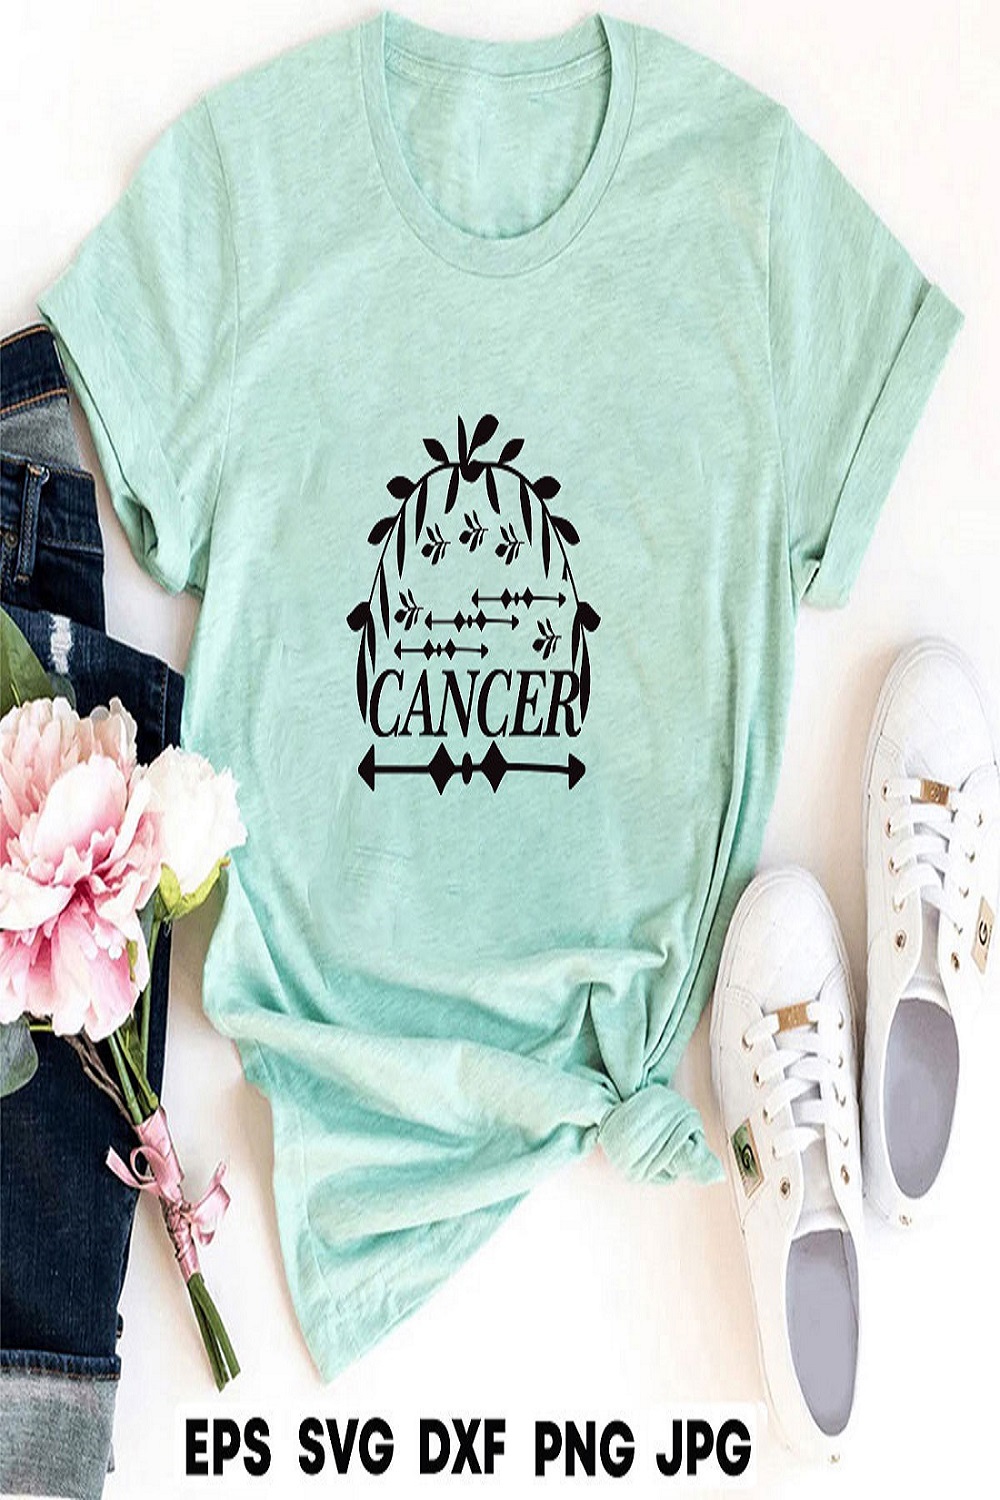 Cancer Design pinterest preview image.